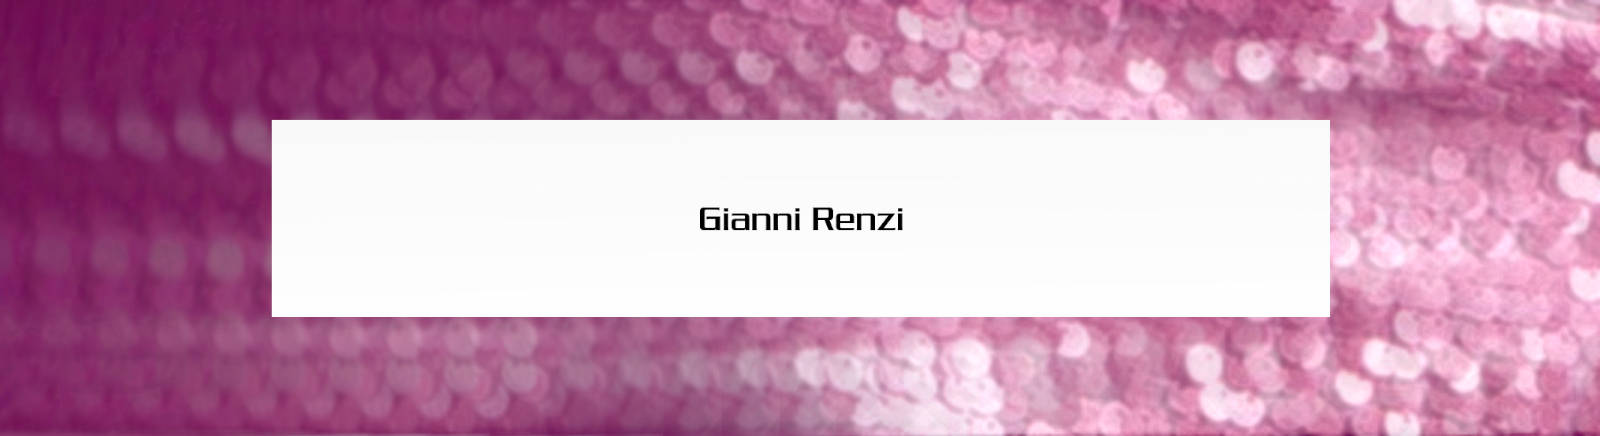 Juppen: Gianni Renzi Combat Boots für Damen online shoppen